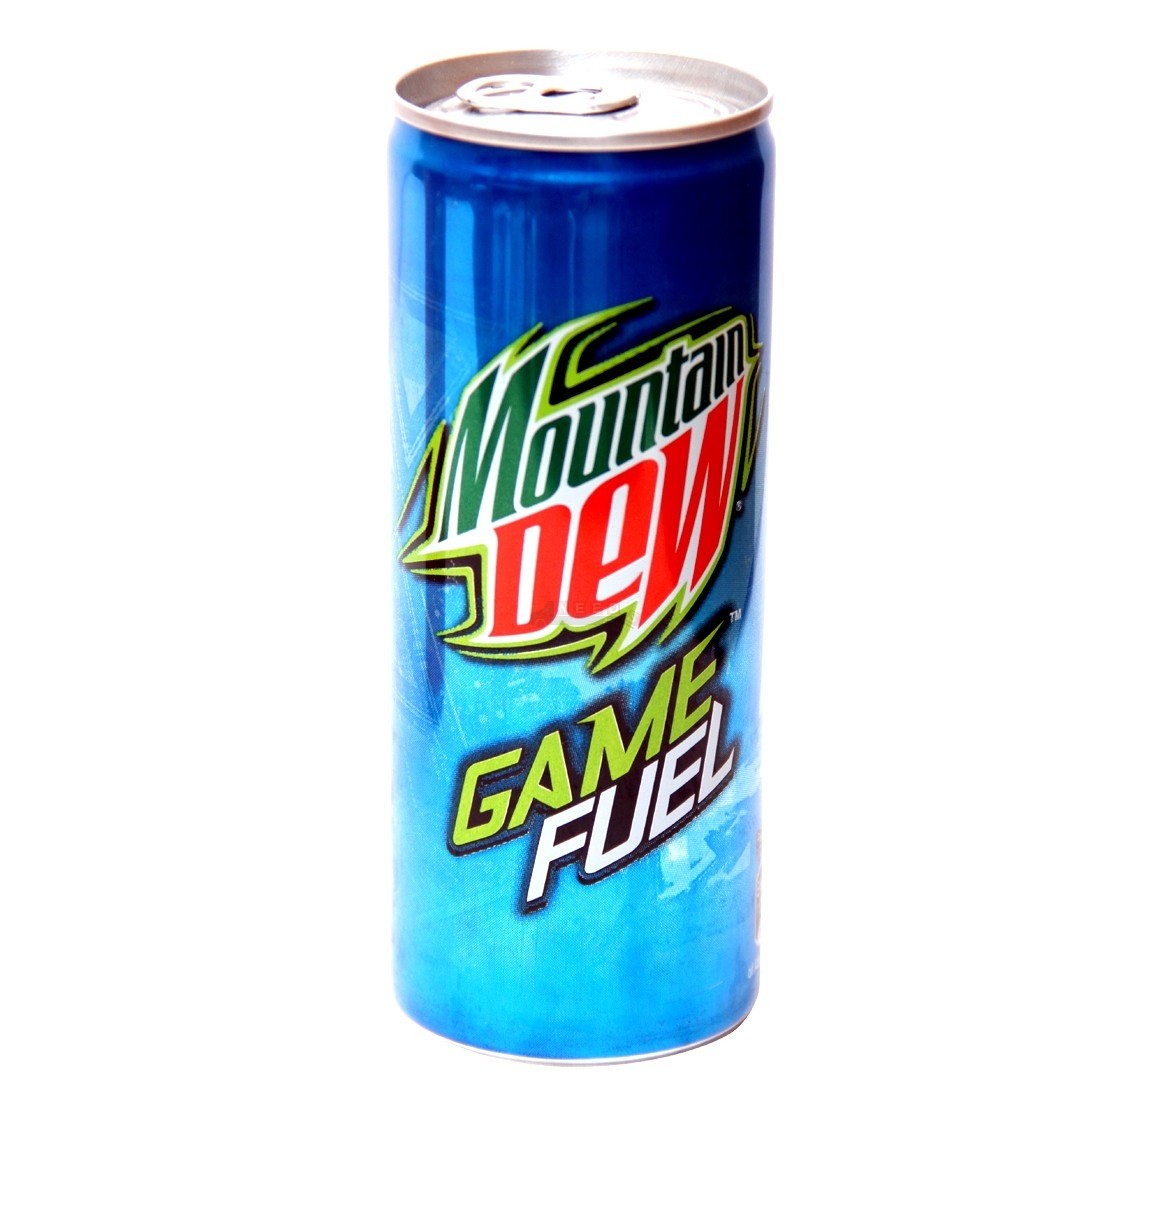 mountain dew game fuel calories